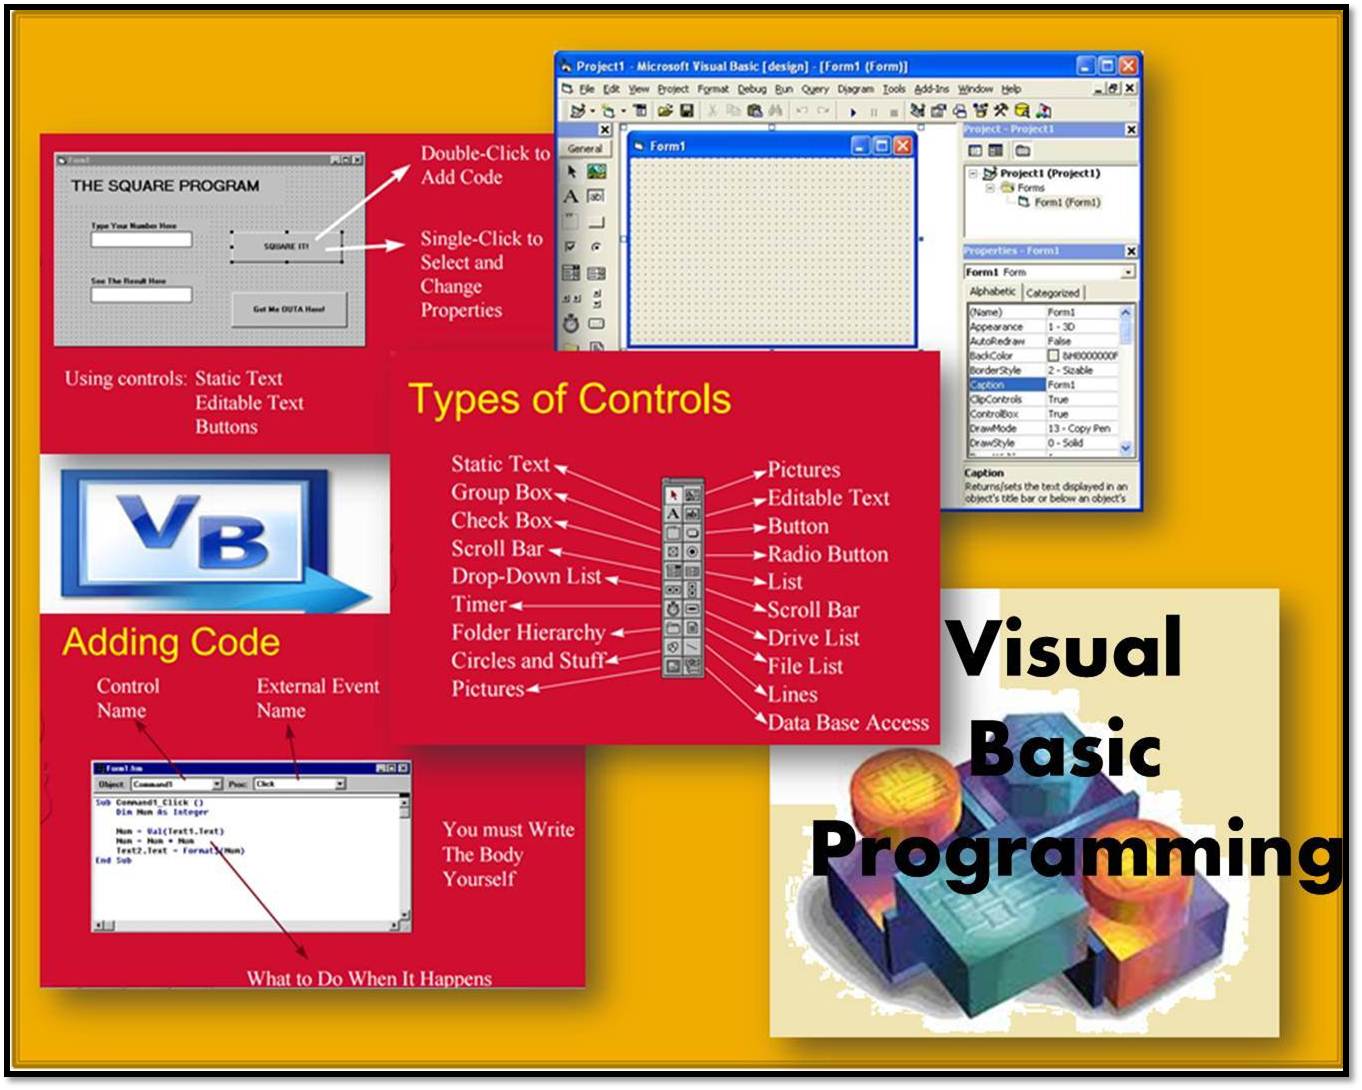 http://study.aisectonline.com/images/Visual Basic Programming.jpg